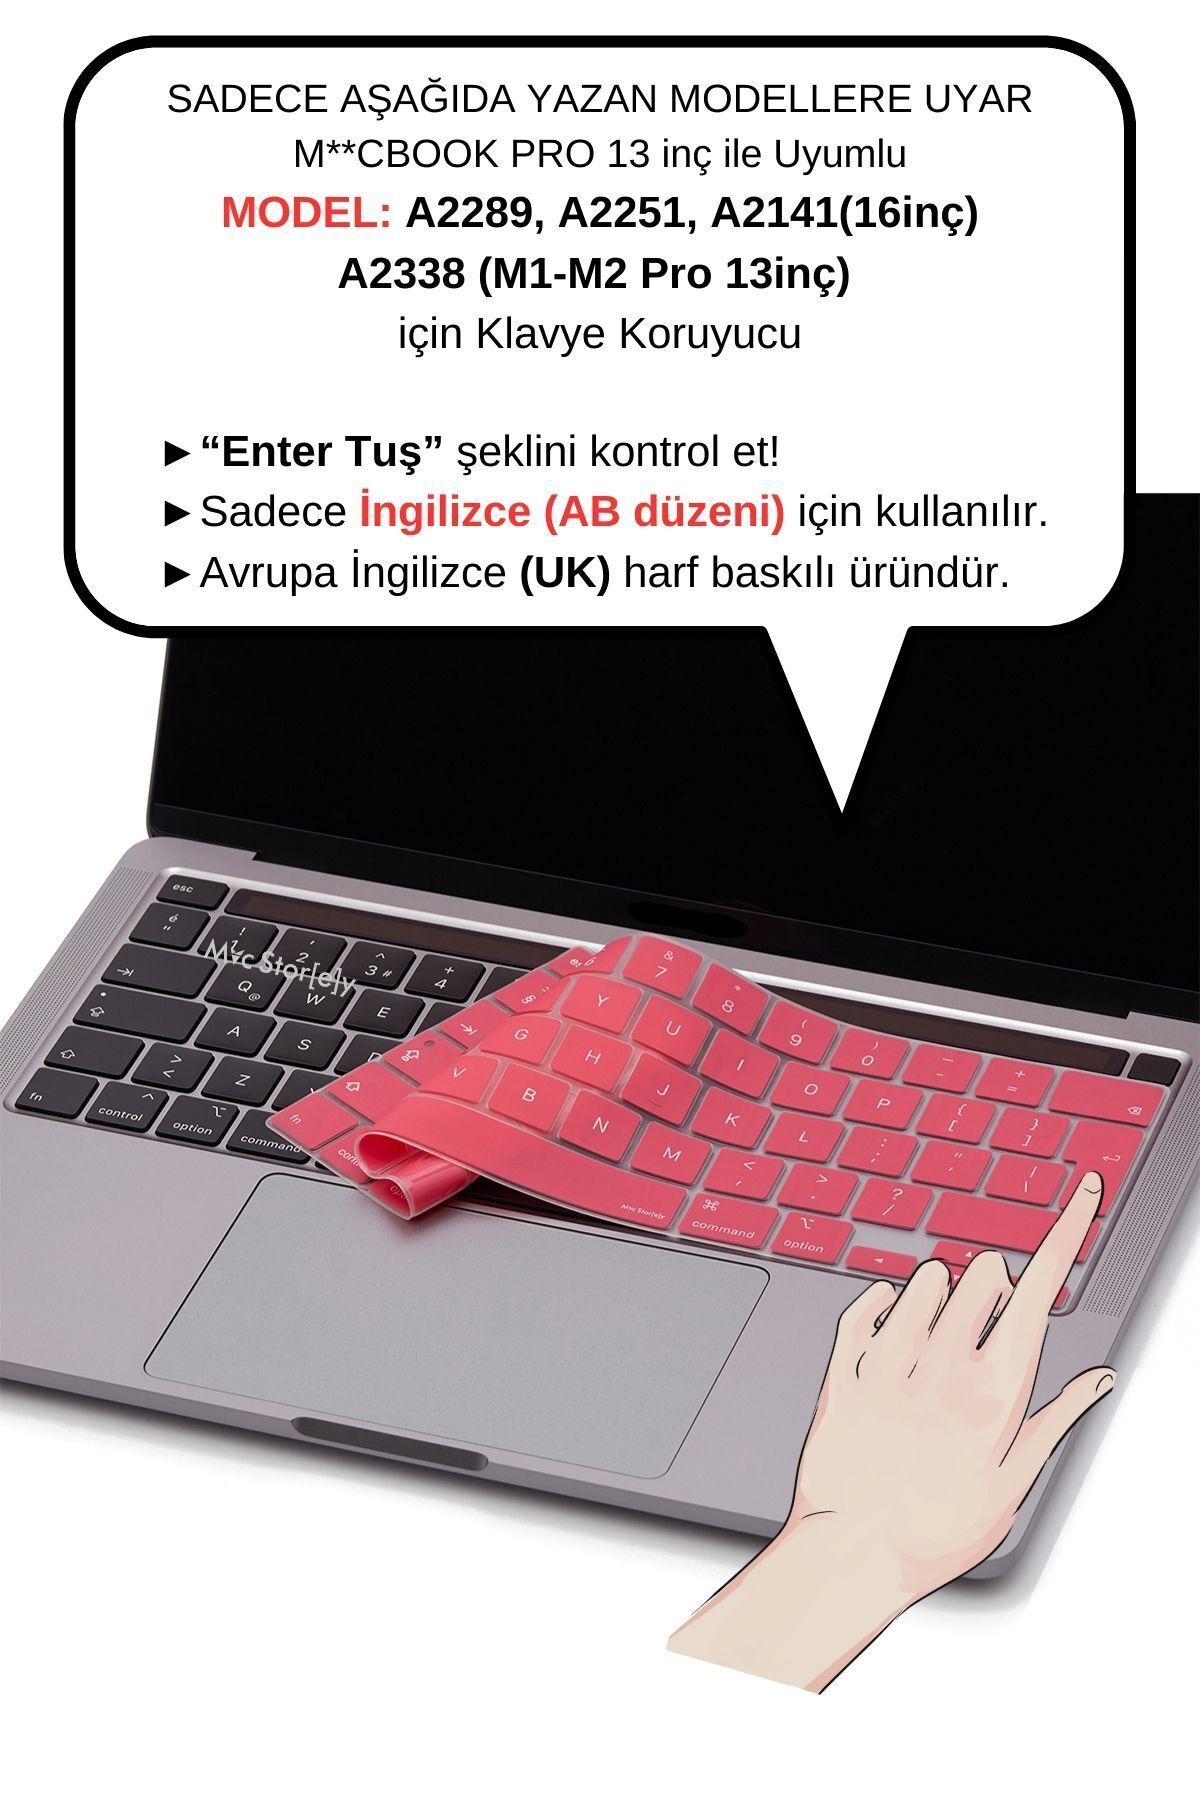 Mcstorey Macbook Klavye Koruyucu Mac Pro 13inç M1-m2 Için (UK-İNGİLİZCE) A2338 A2289 A2251 A2141 Iıe Uyumlu